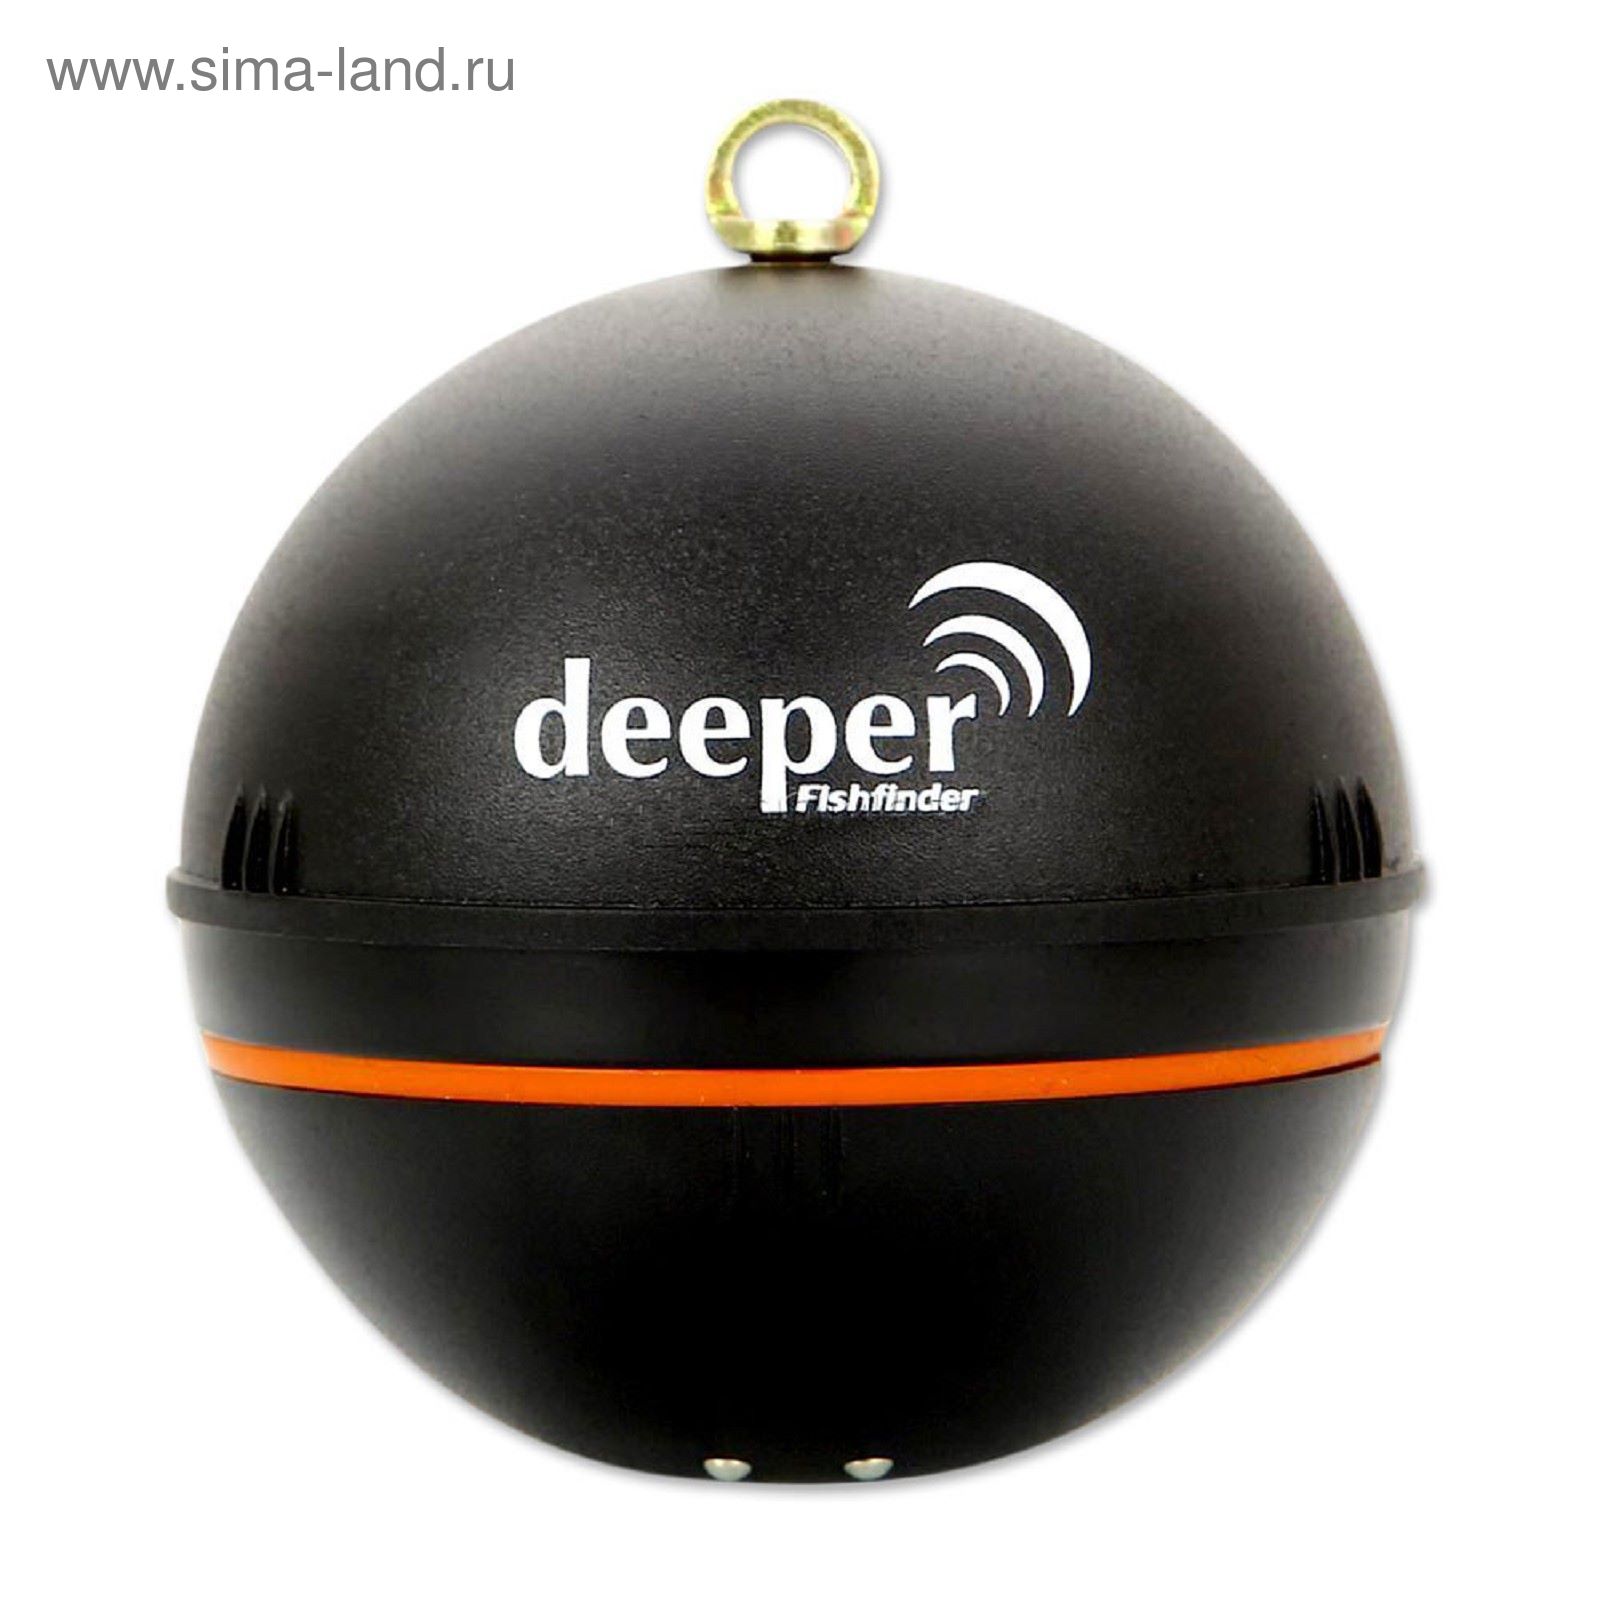 Deeper pro. Эхолот Deeper 3.0. Эхолот Deeper Fishfinder. Эхолот круглый Deeper. Deeper Fishfinder батарея.